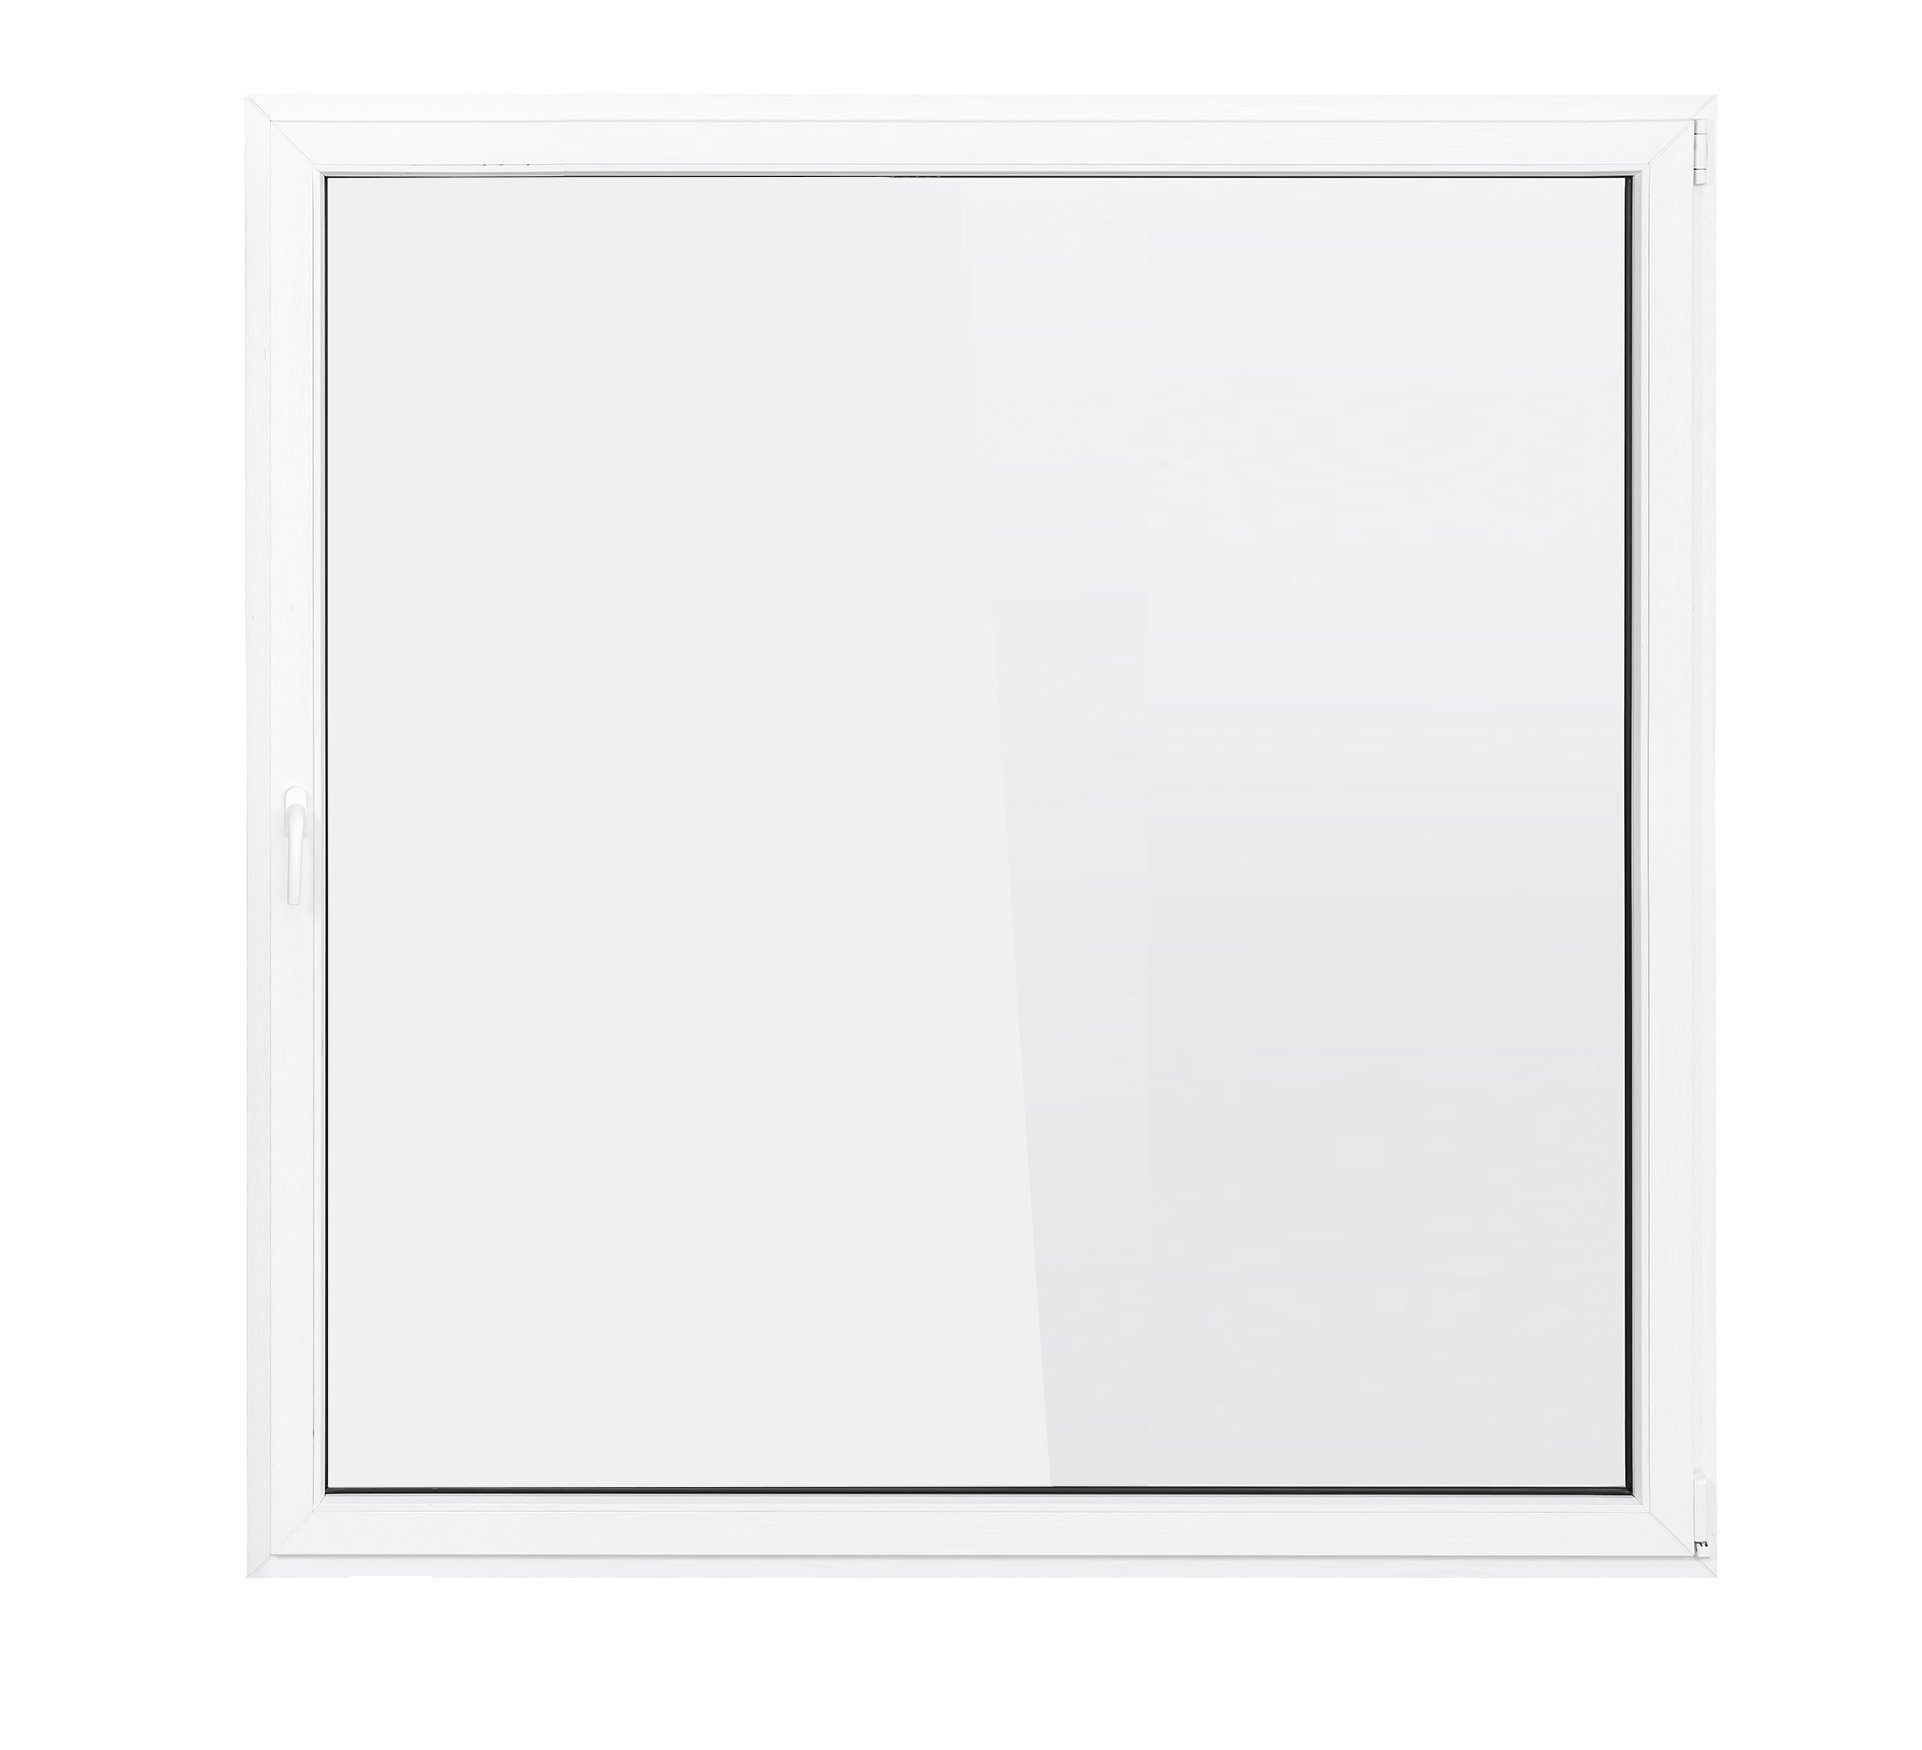 SN DECO GROUP Kellerfenster 1 Flügel 800x800 Dreh-Kipp 2-fach Verglasung weiß 70 mm Profil, (Set), RC2 Sicherheitsbeschlag, Hochwertiges 5-Kammer-Profil